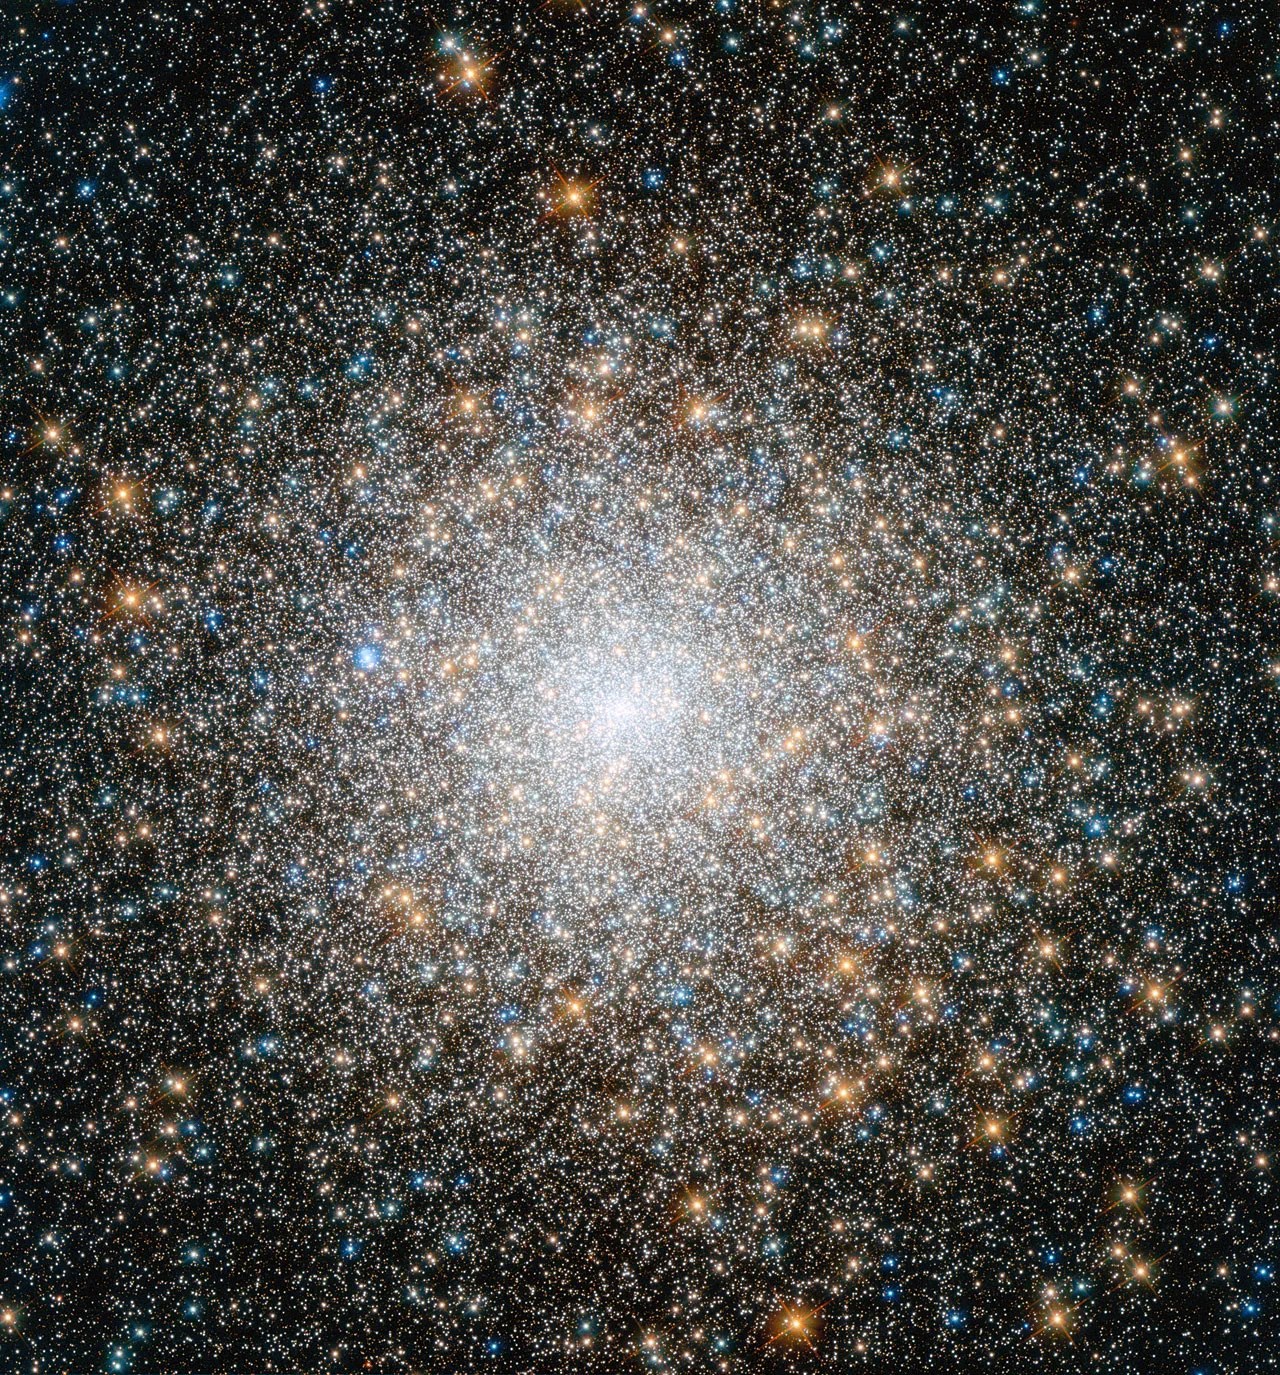 A dense globular cluster of thousands of stars.